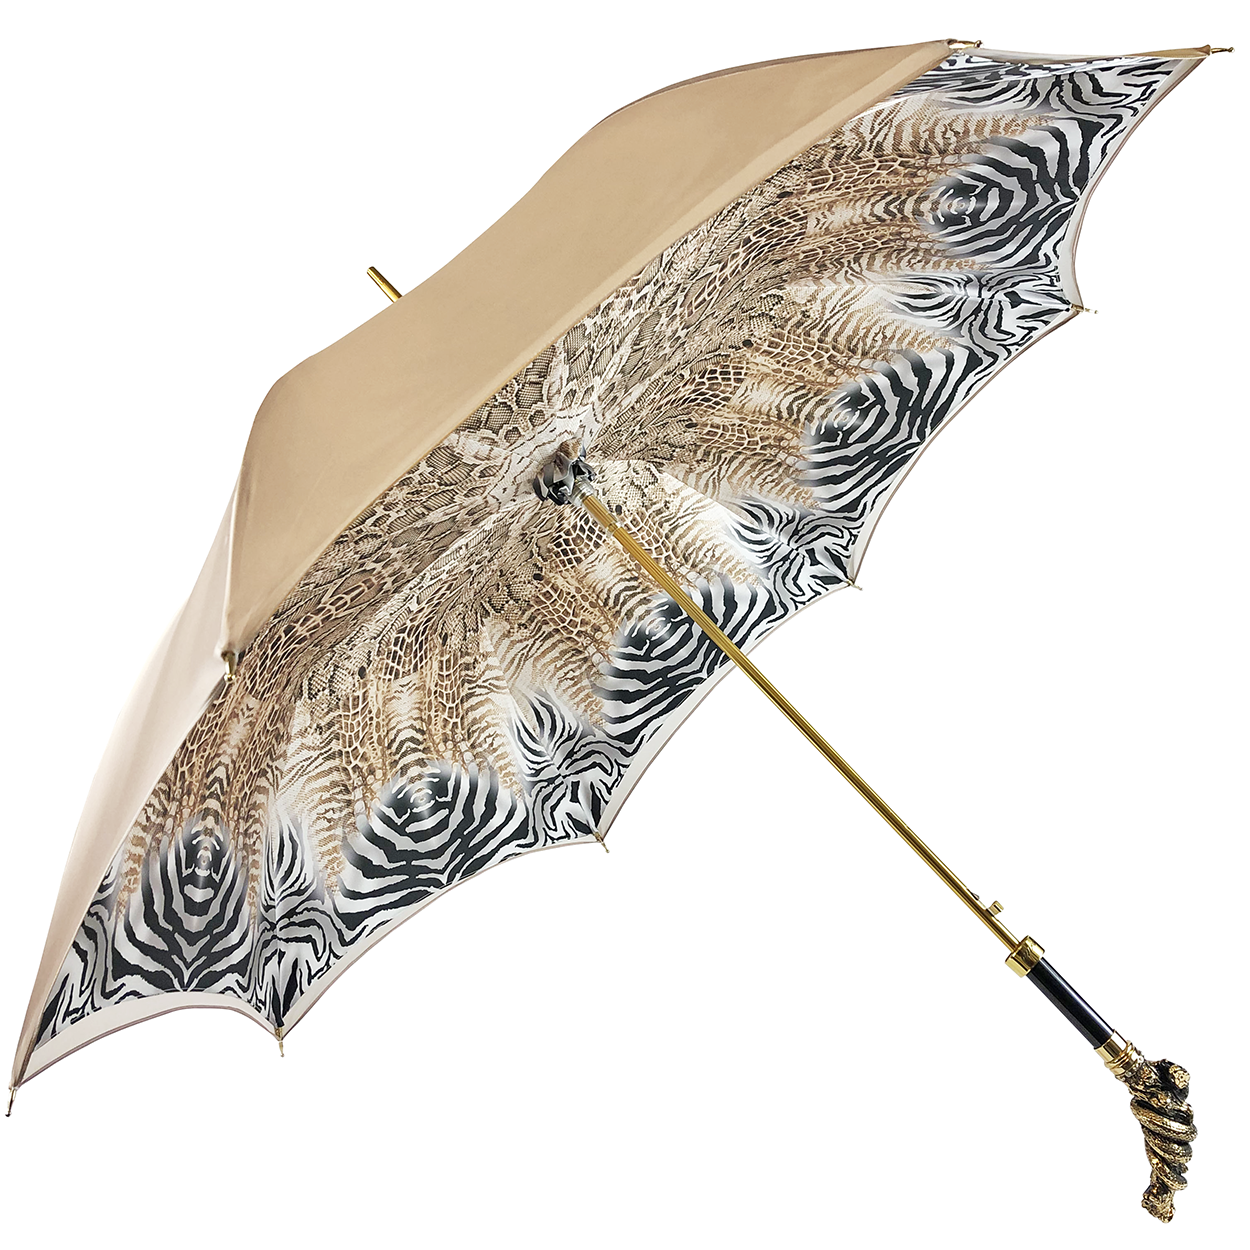 Fine and Elegant Animalier Umbrella - "ilMarchesato"